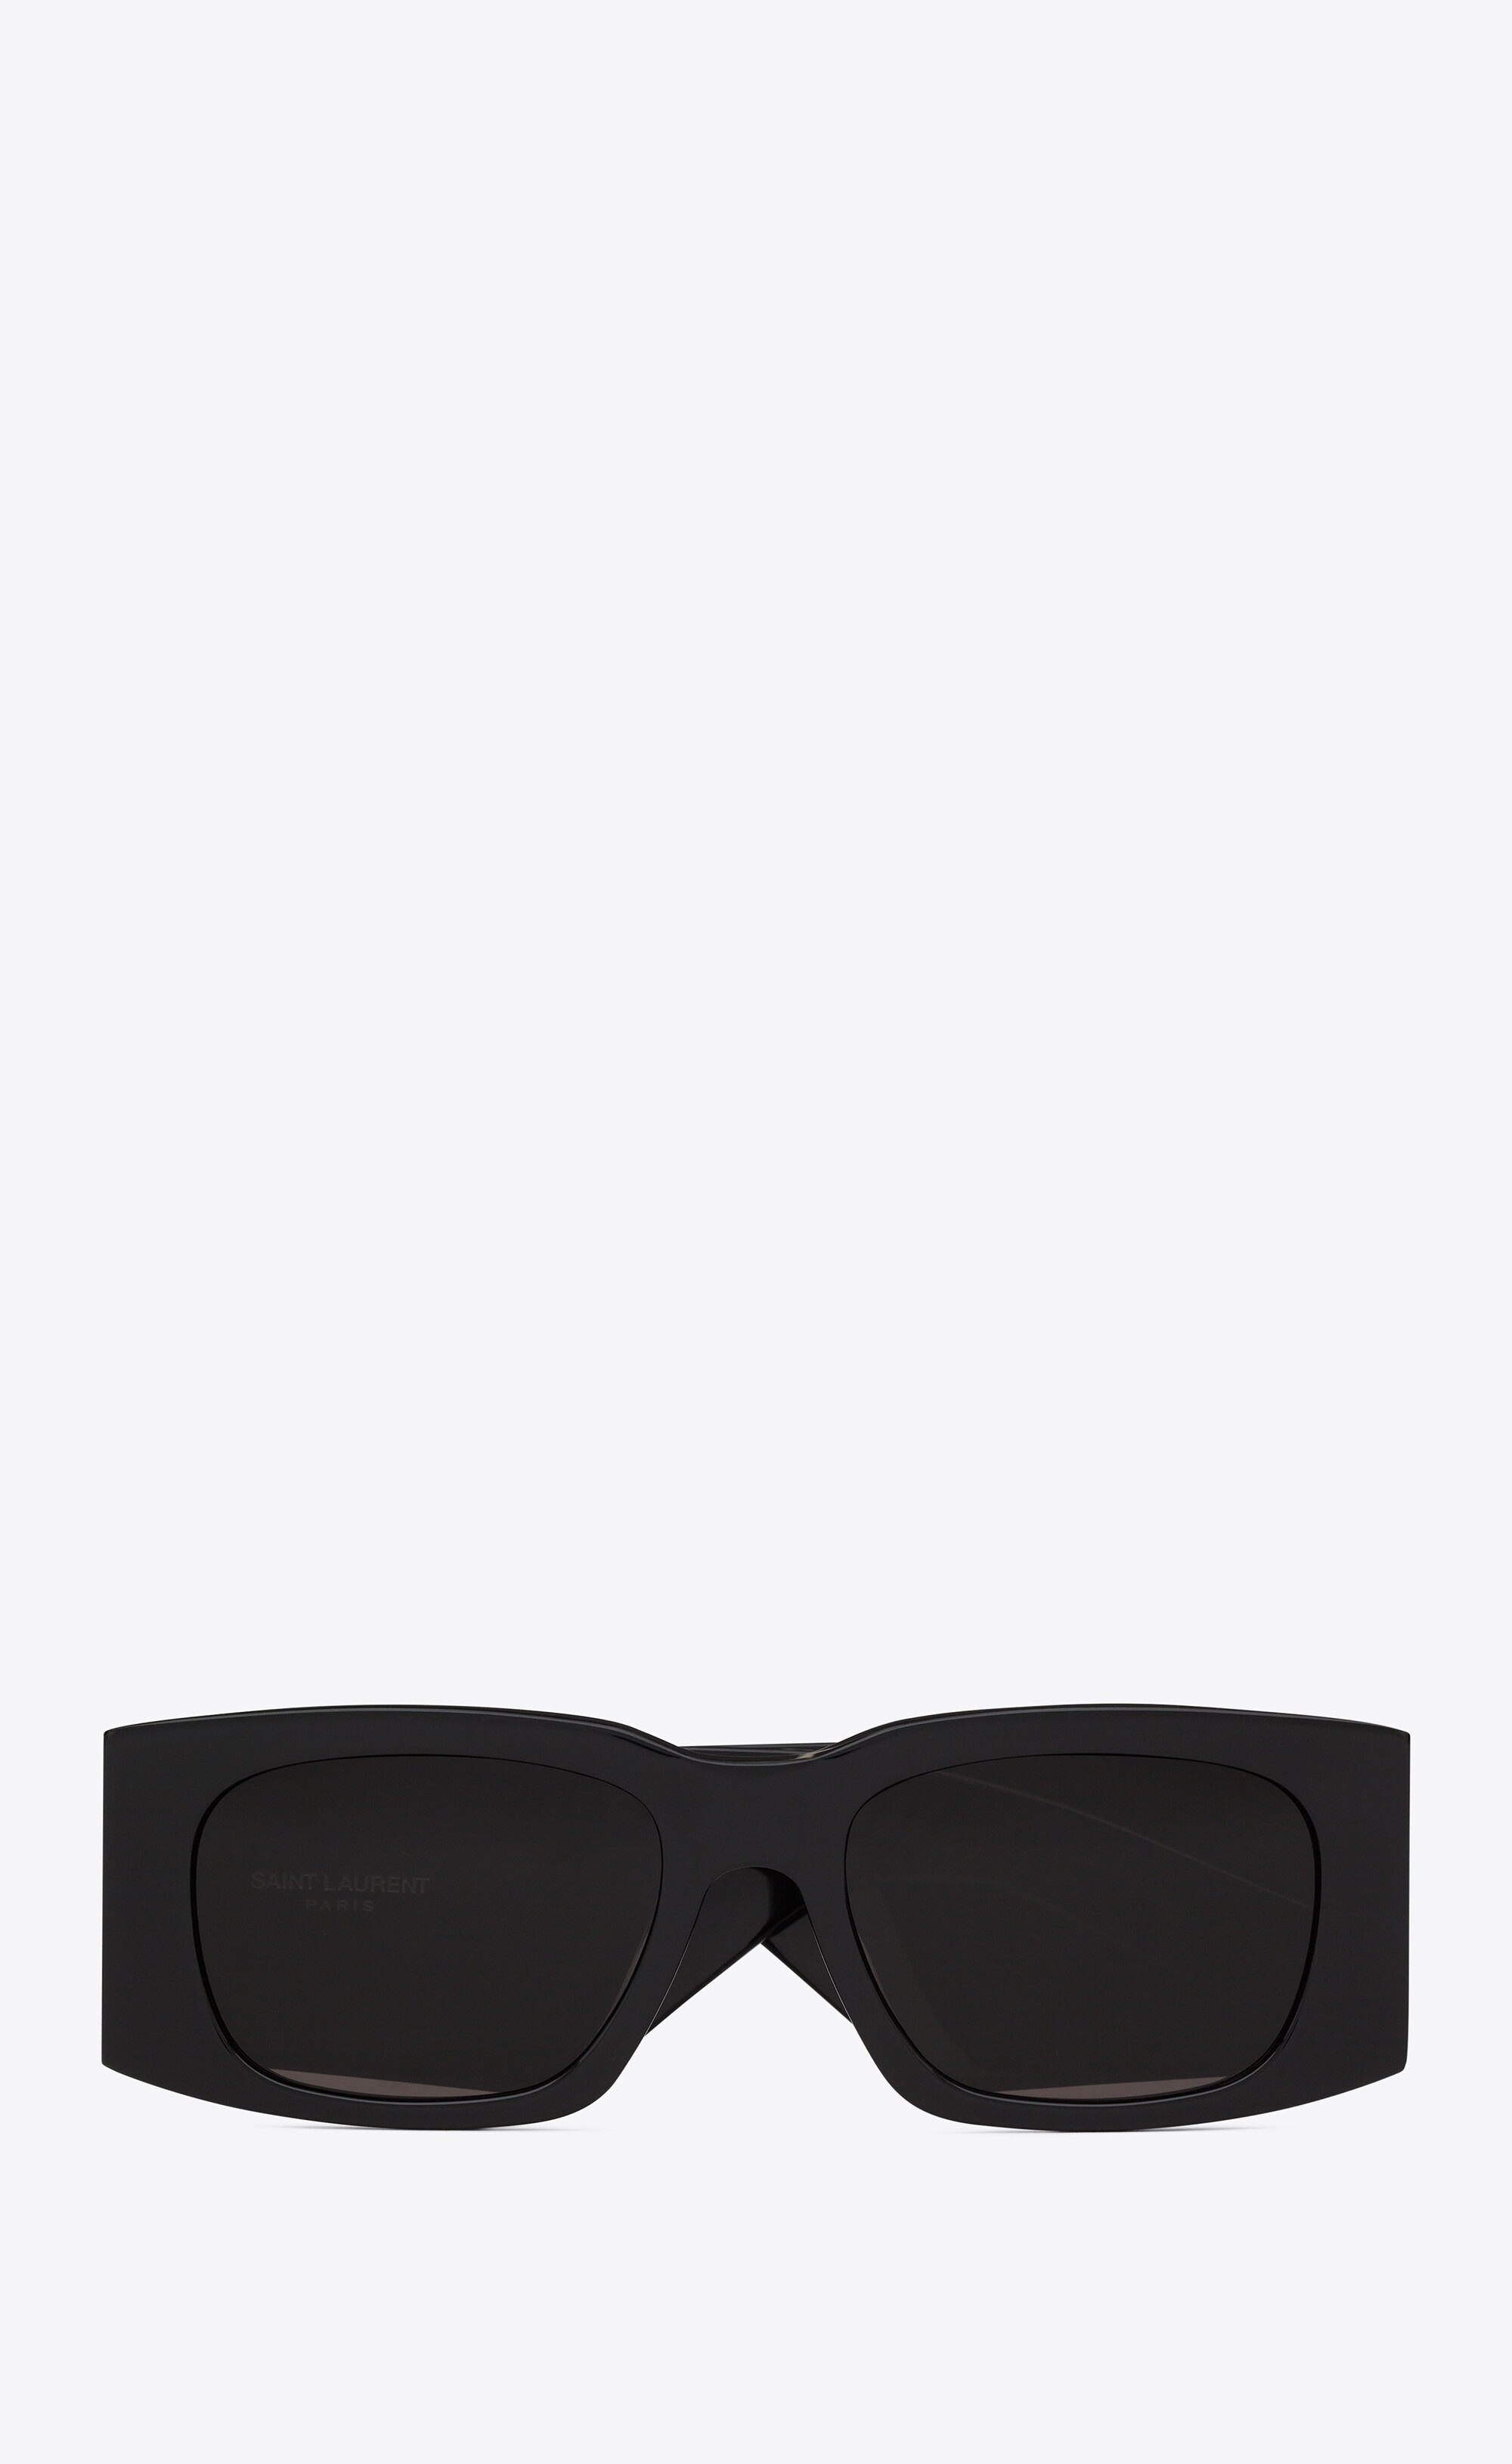 Saint Laurent: Black SL 569 Sunglasses